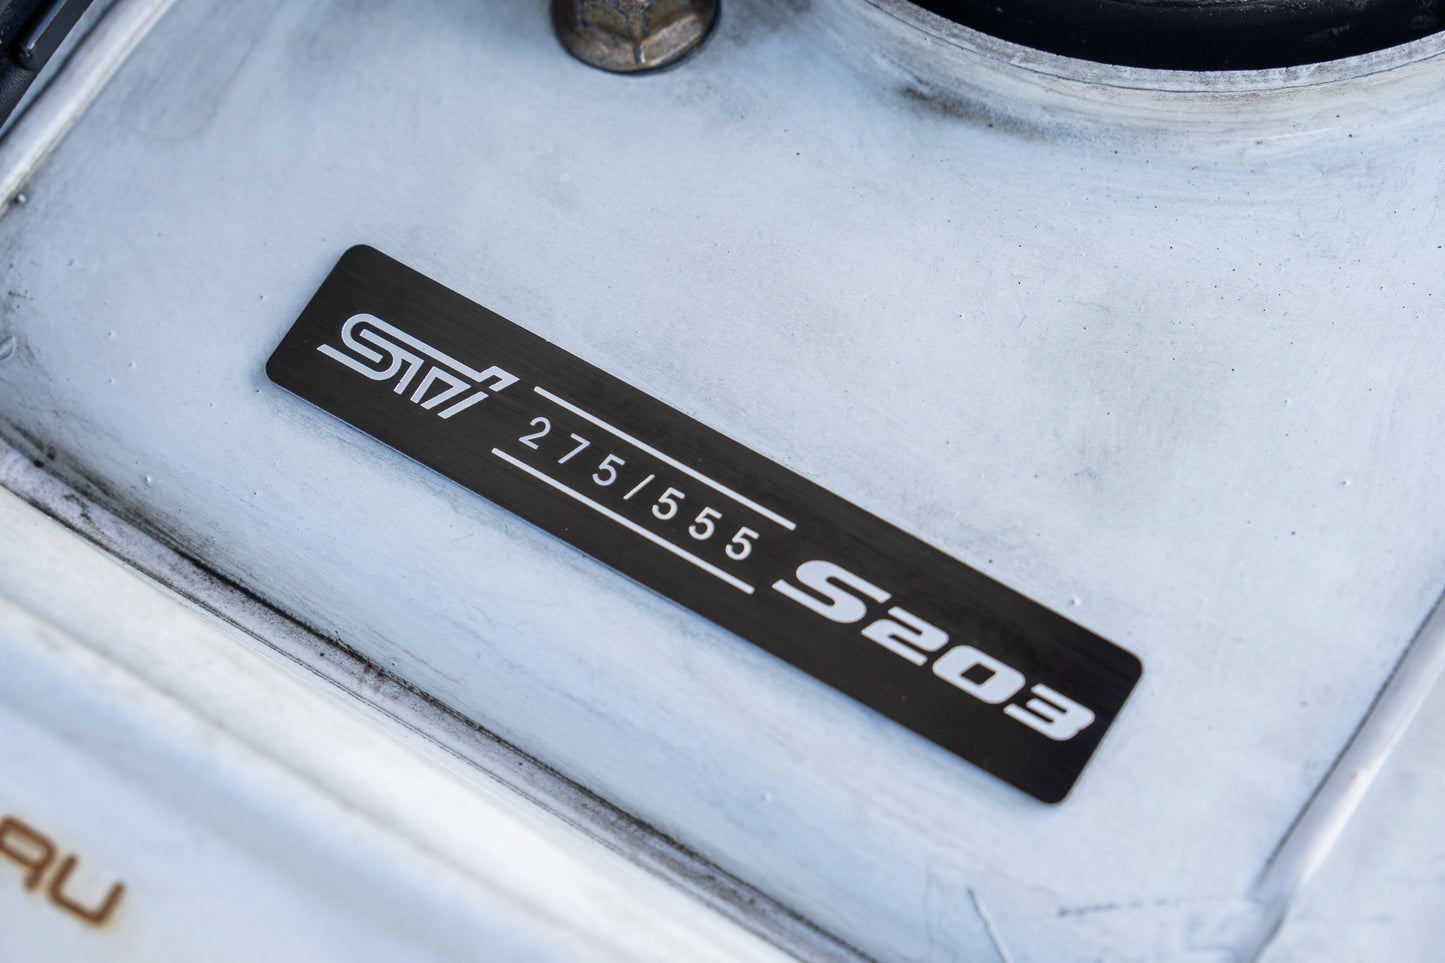 Subaru Impreza WRX STI S203 - 2005